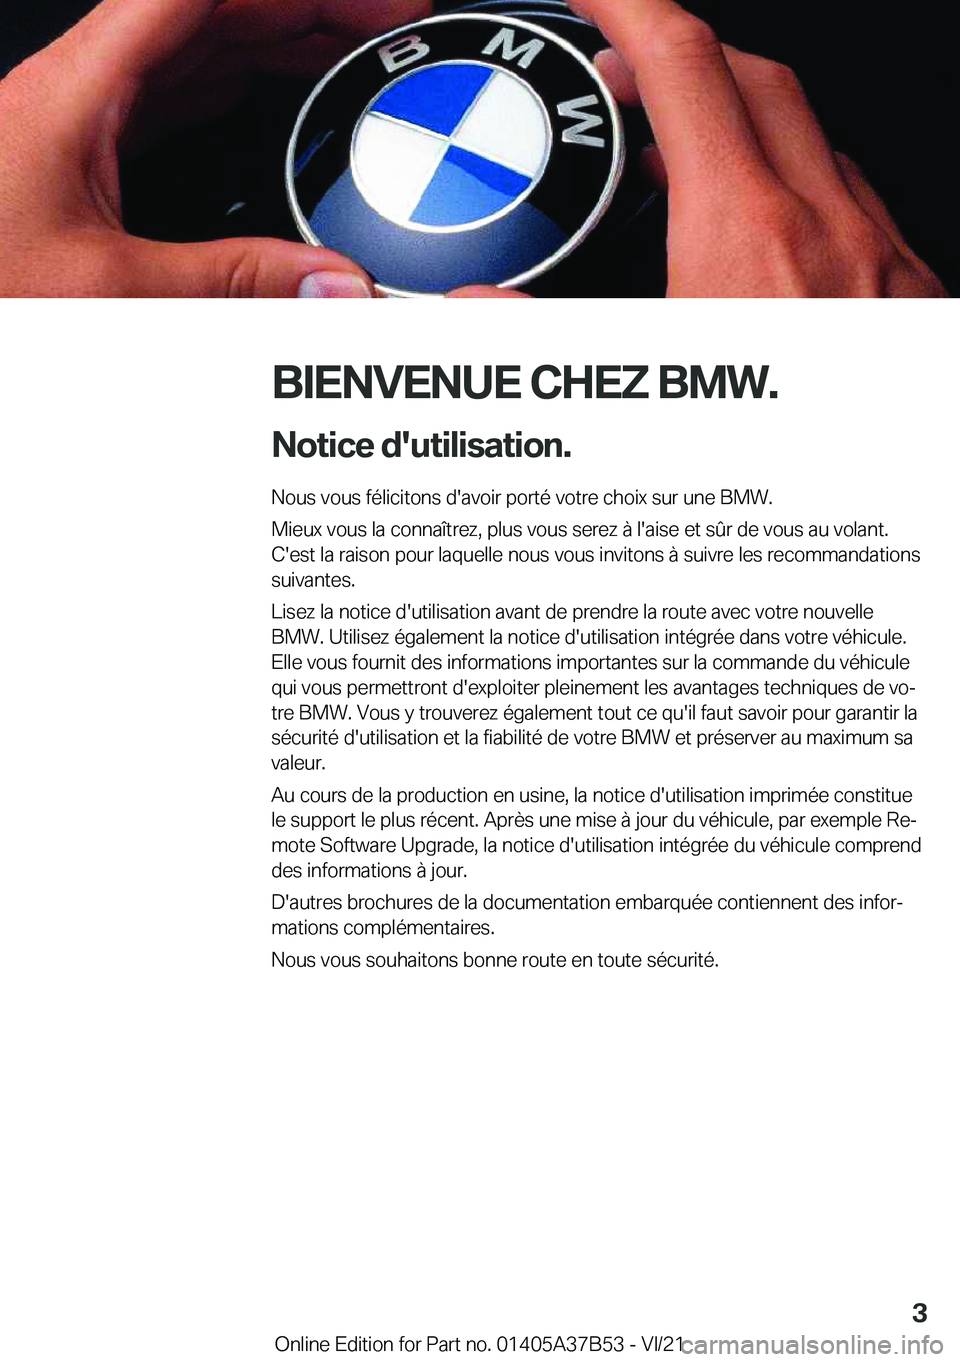 BMW M8 2022  Notices Demploi (in French) �B�I�E�N�V�E�N�U�E��C�H�E�Z��B�M�W�.�N�o�t�i�c�e��d�'�u�t�i�l�i�s�a�t�i�o�n�.
�N�o�u�s��v�o�u�s��f�é�l�i�c�i�t�o�n�s��d�'�a�v�o�i�r��p�o�r�t�é��v�o�t�r�e��c�h�o�i�x��s�u�r��u�n�e�